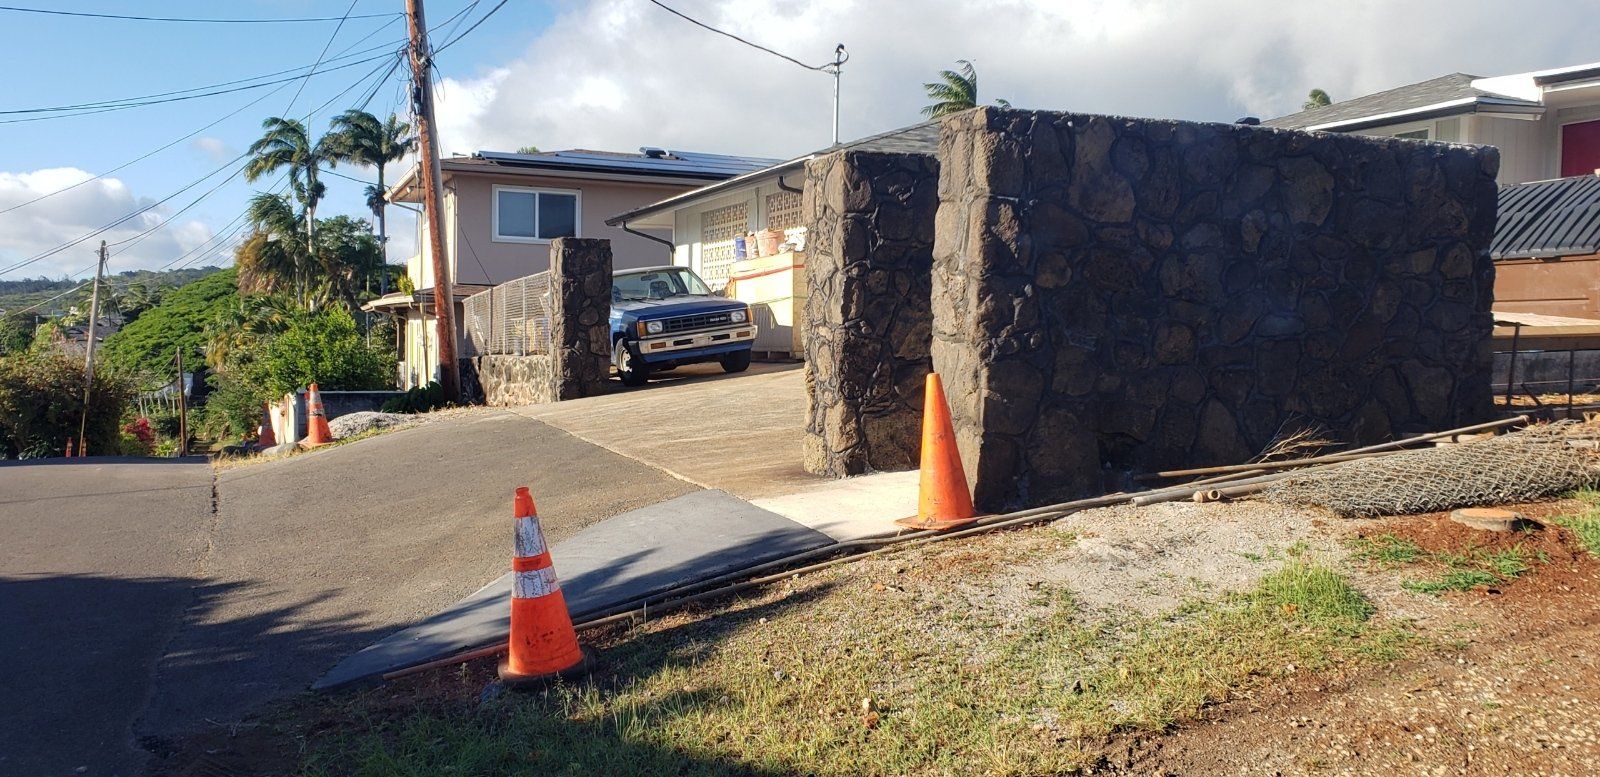 A new lava rock wall Hawaii fence built in Honolulu